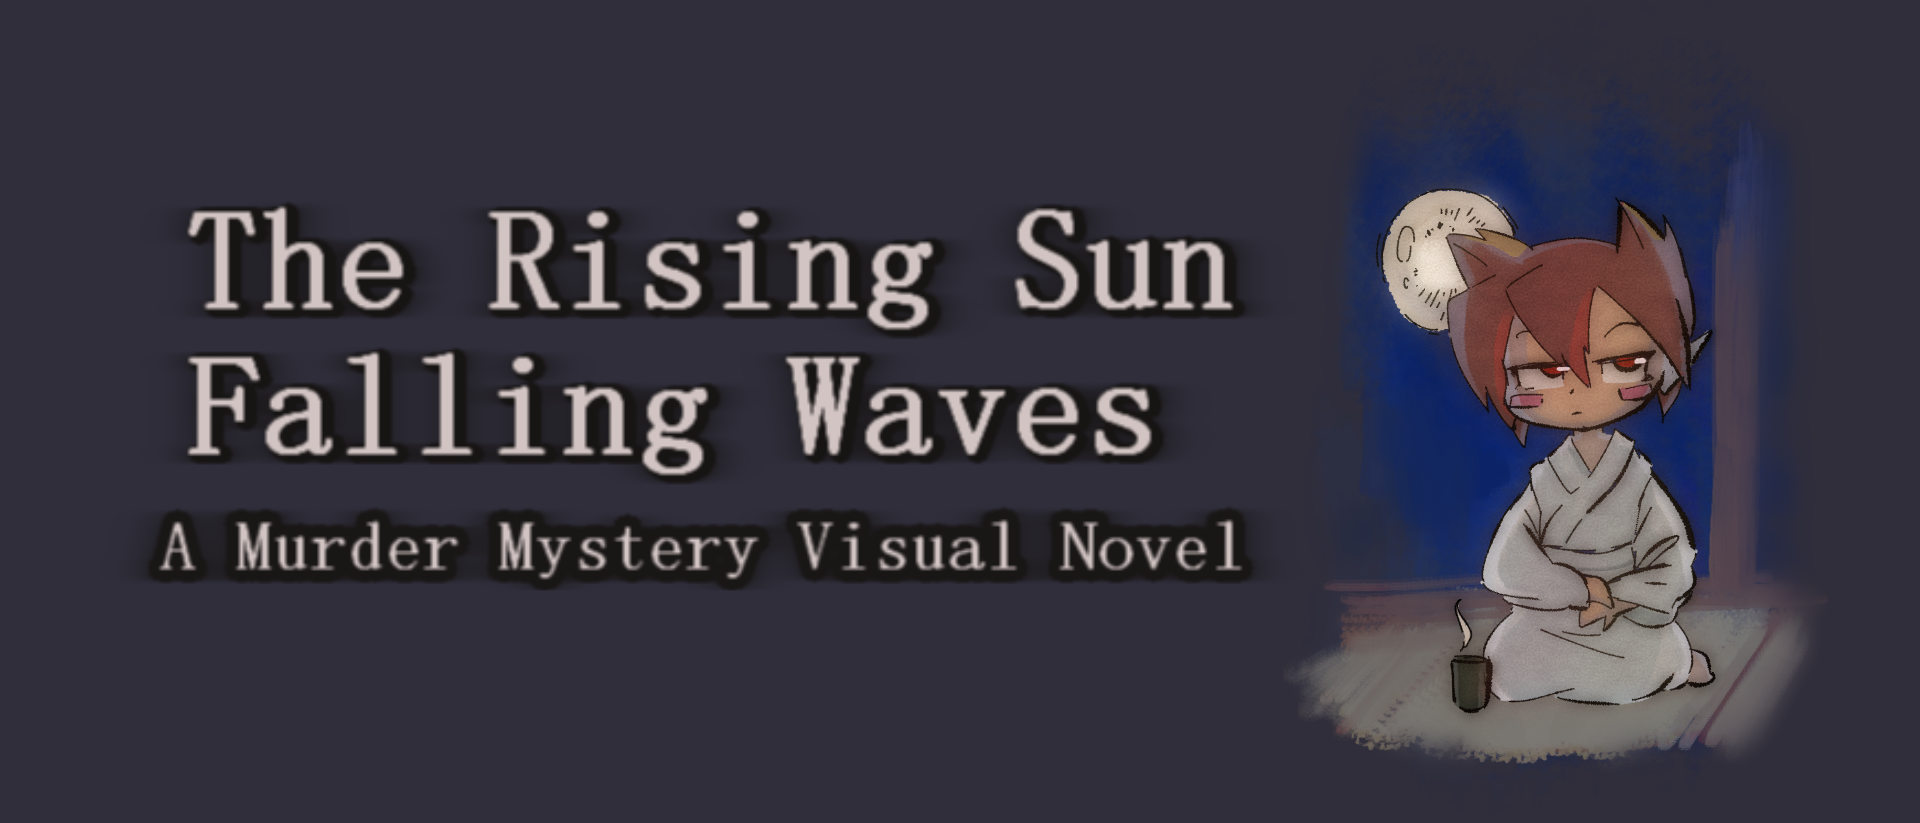 The Rising Sun, Falling Waves